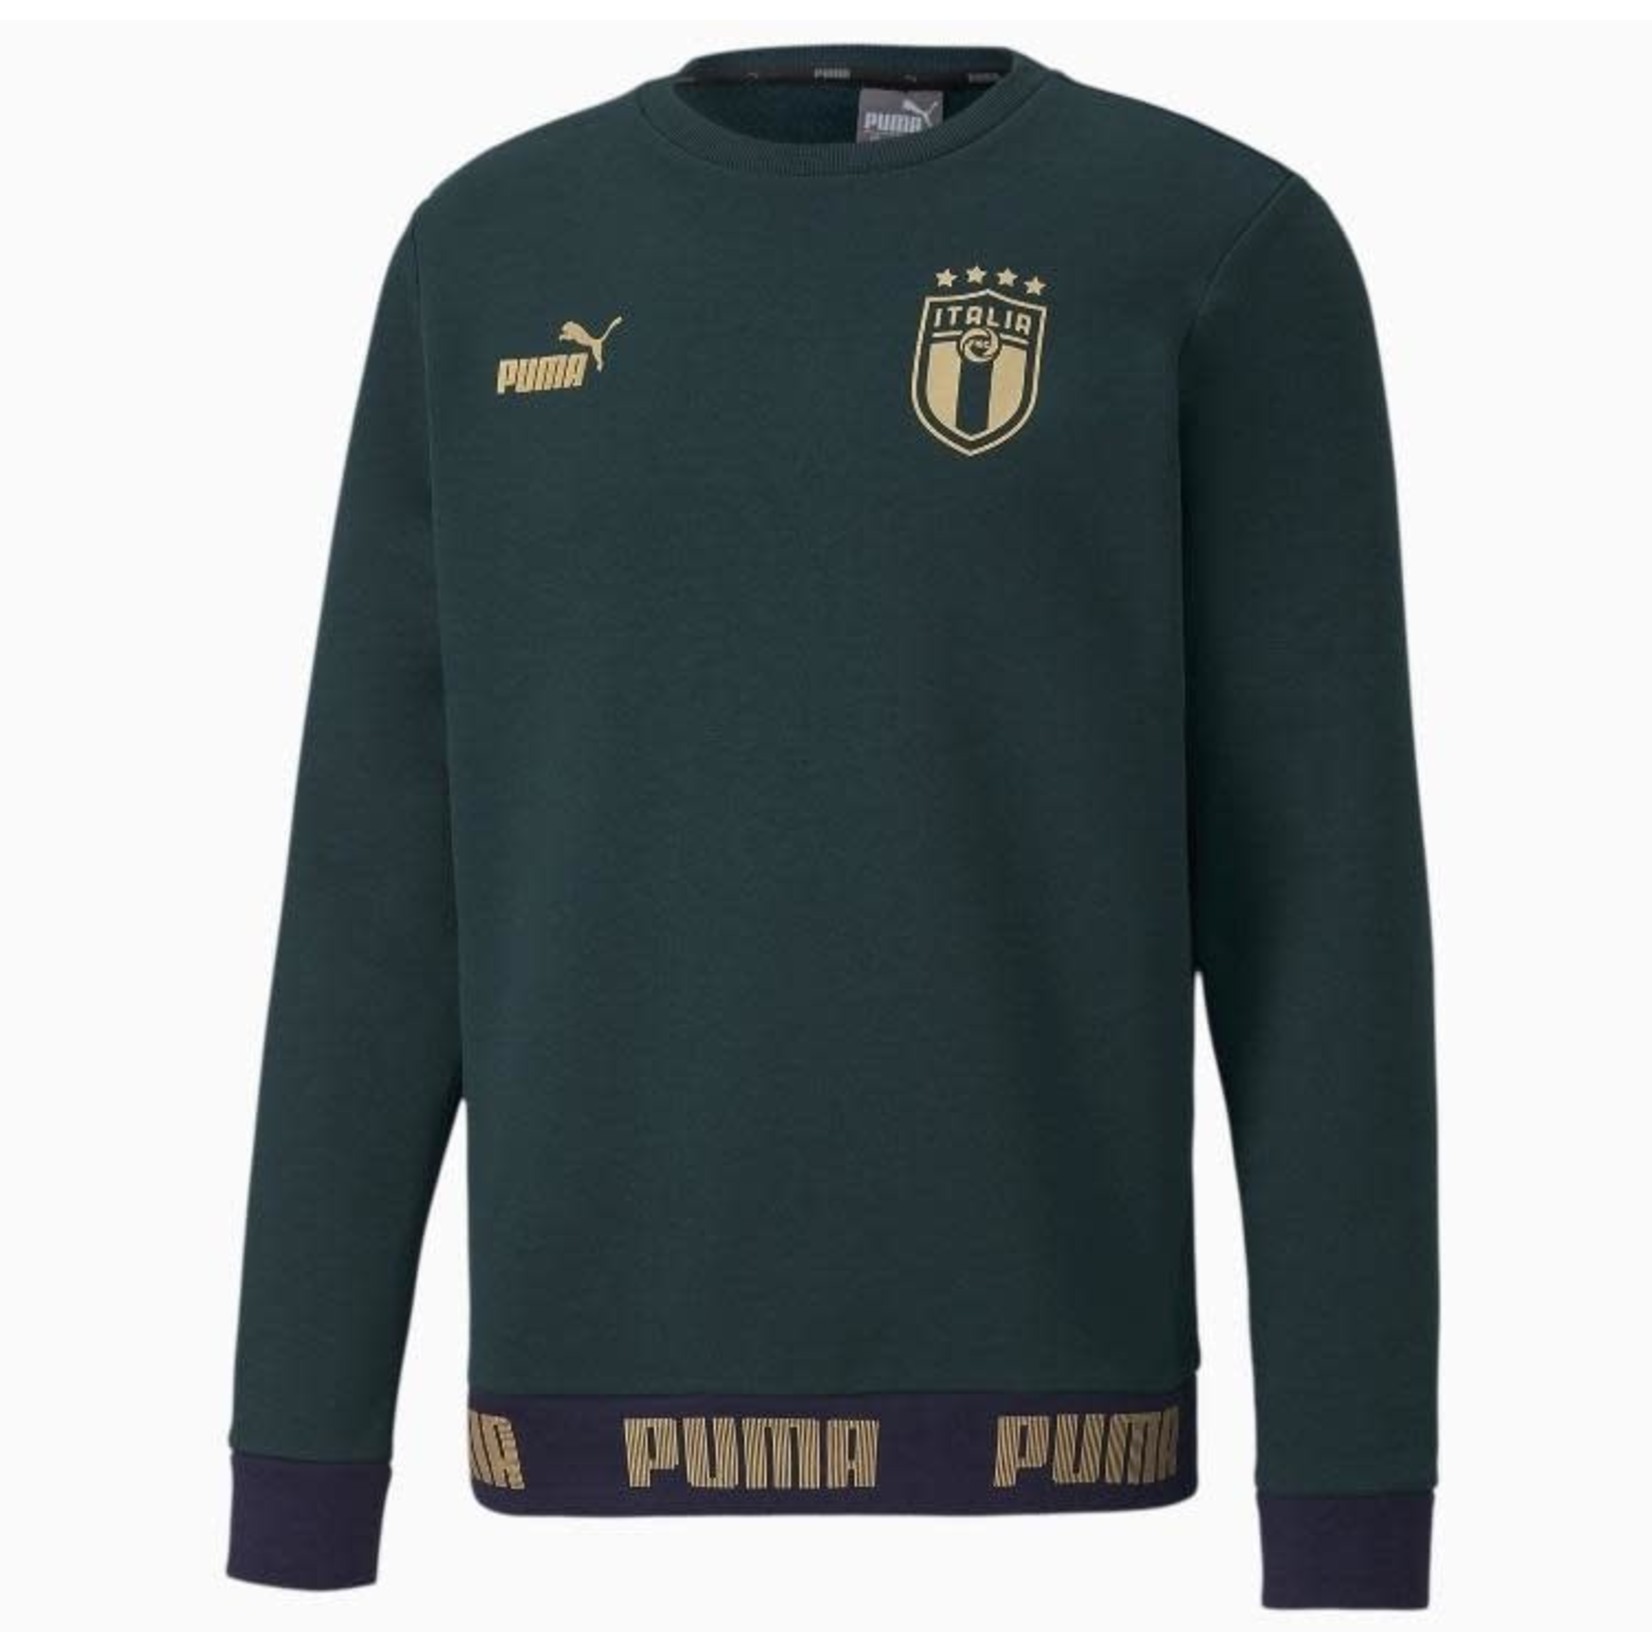 Puma Italy Sweatshirt - Euro 2020 Third